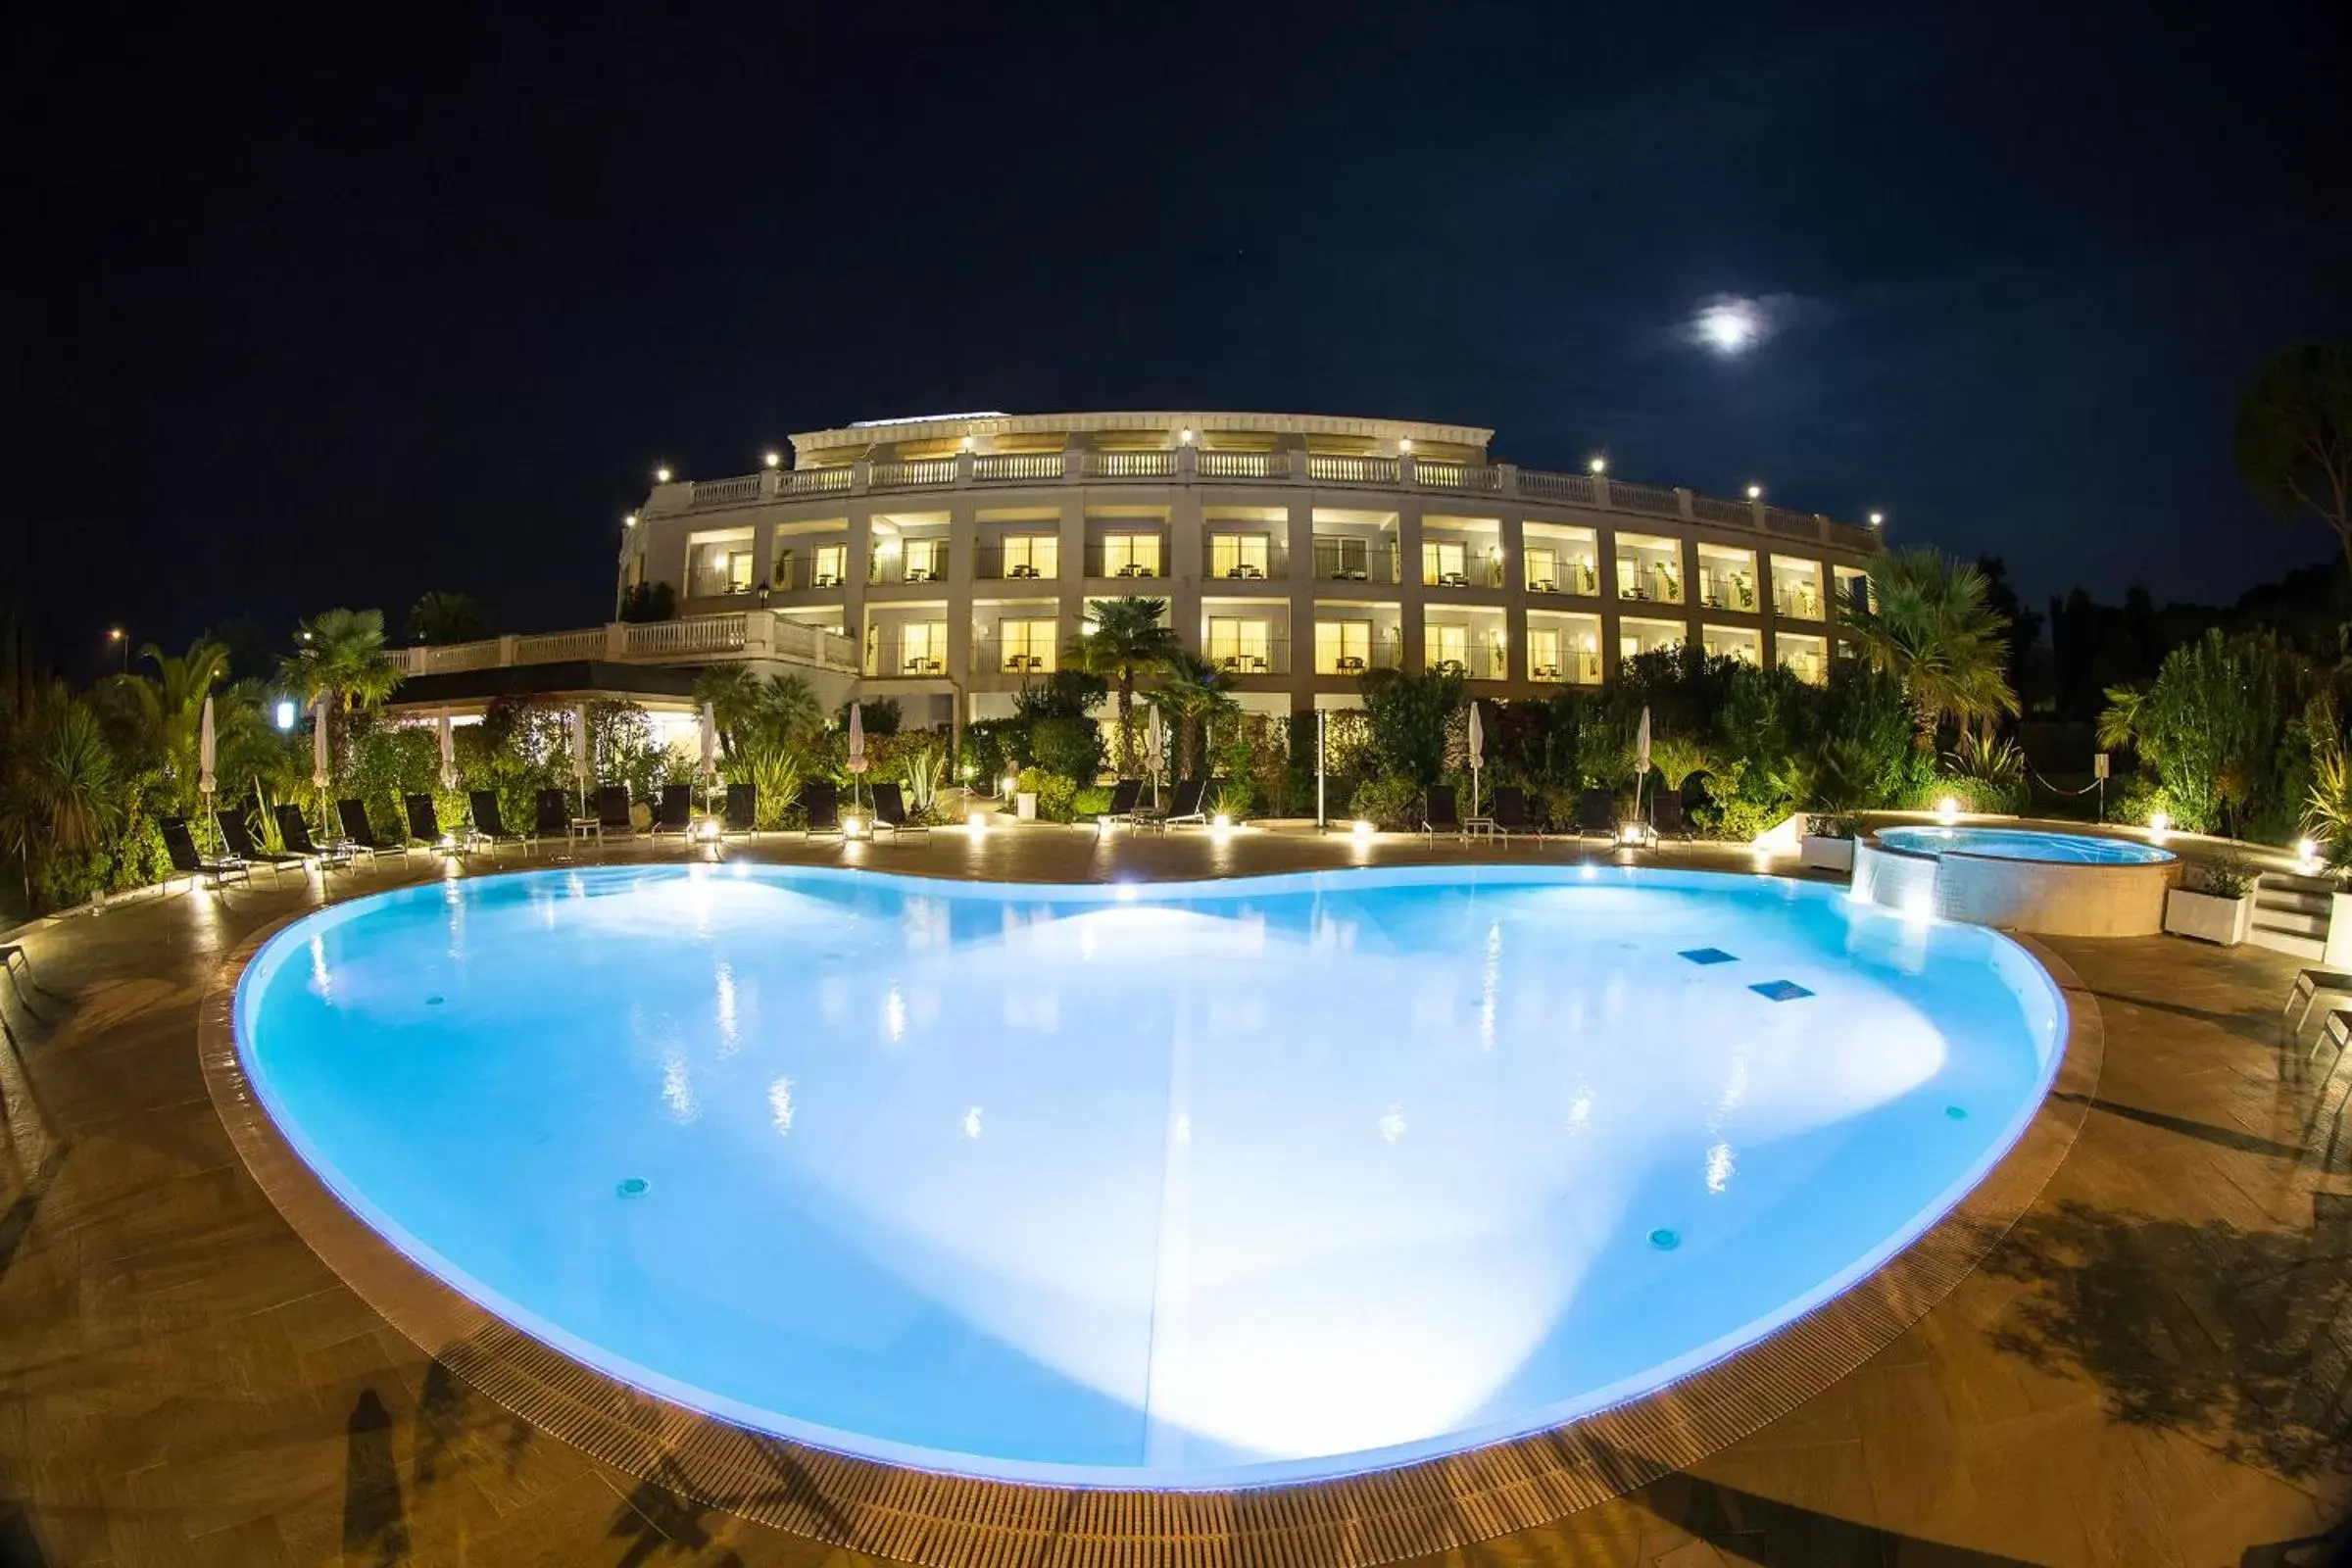 Night, Swimming Pool in Palace Hotel